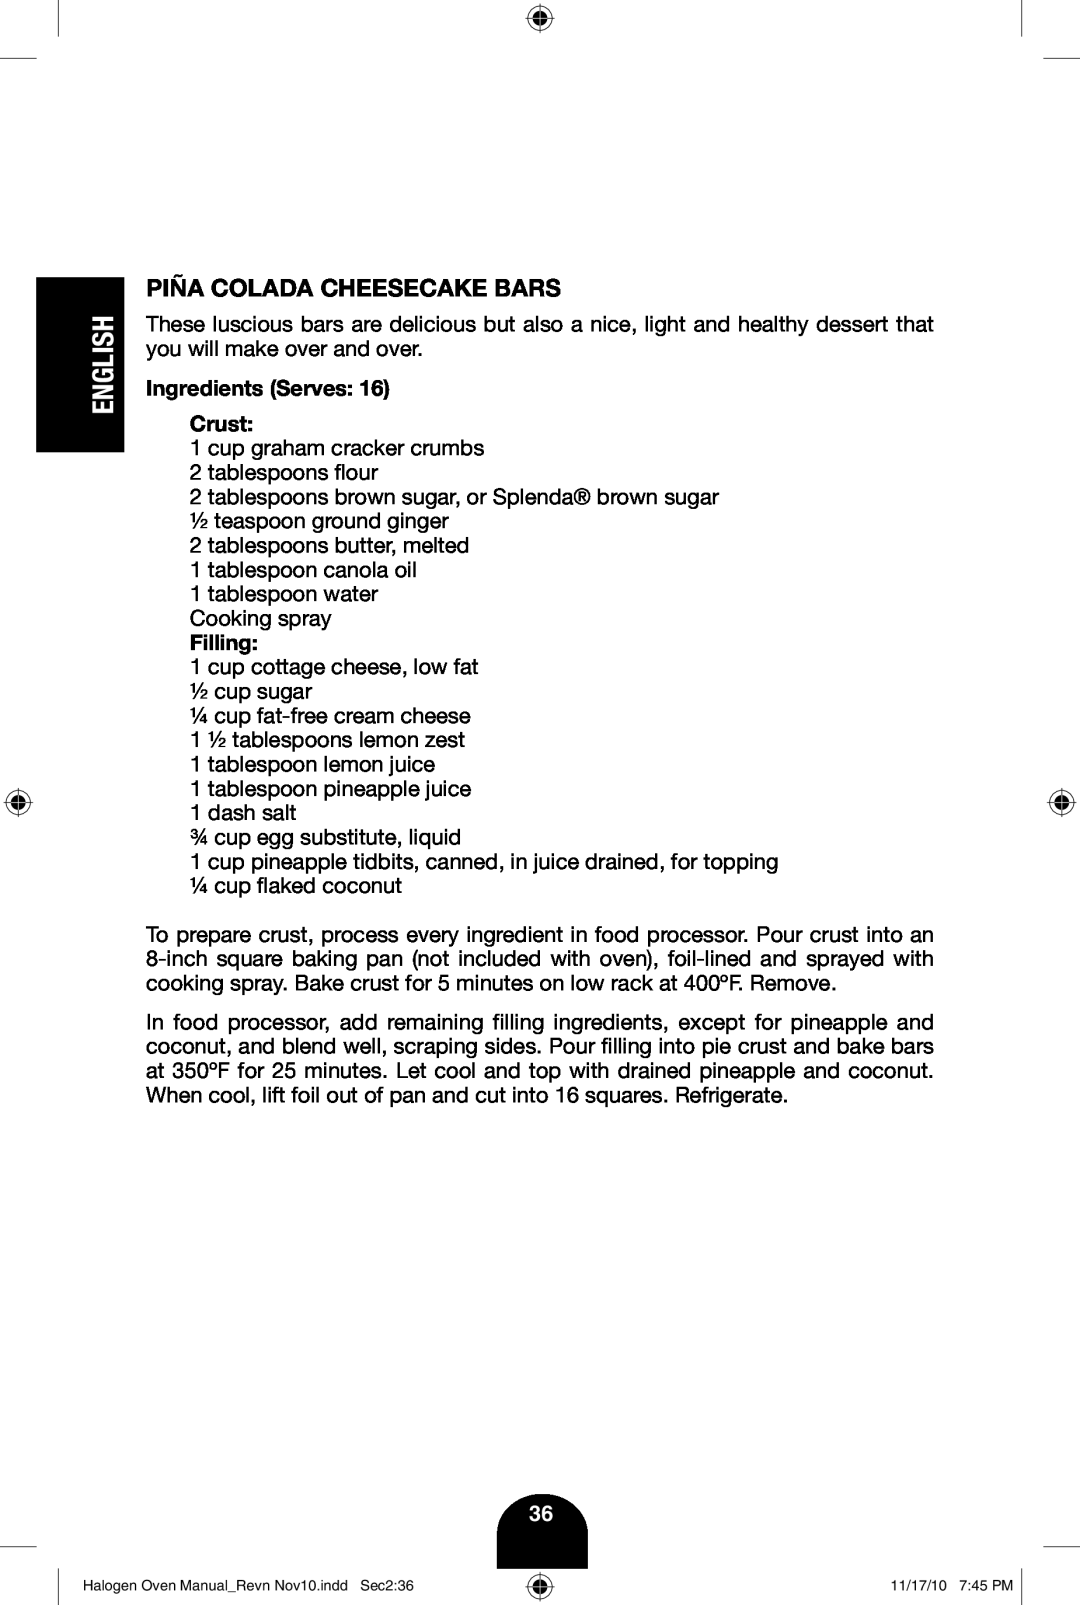 Fagor America 670040380 user manual Piña Colada Cheesecake Bars, English, Ingredients Serves Crust, Filling 